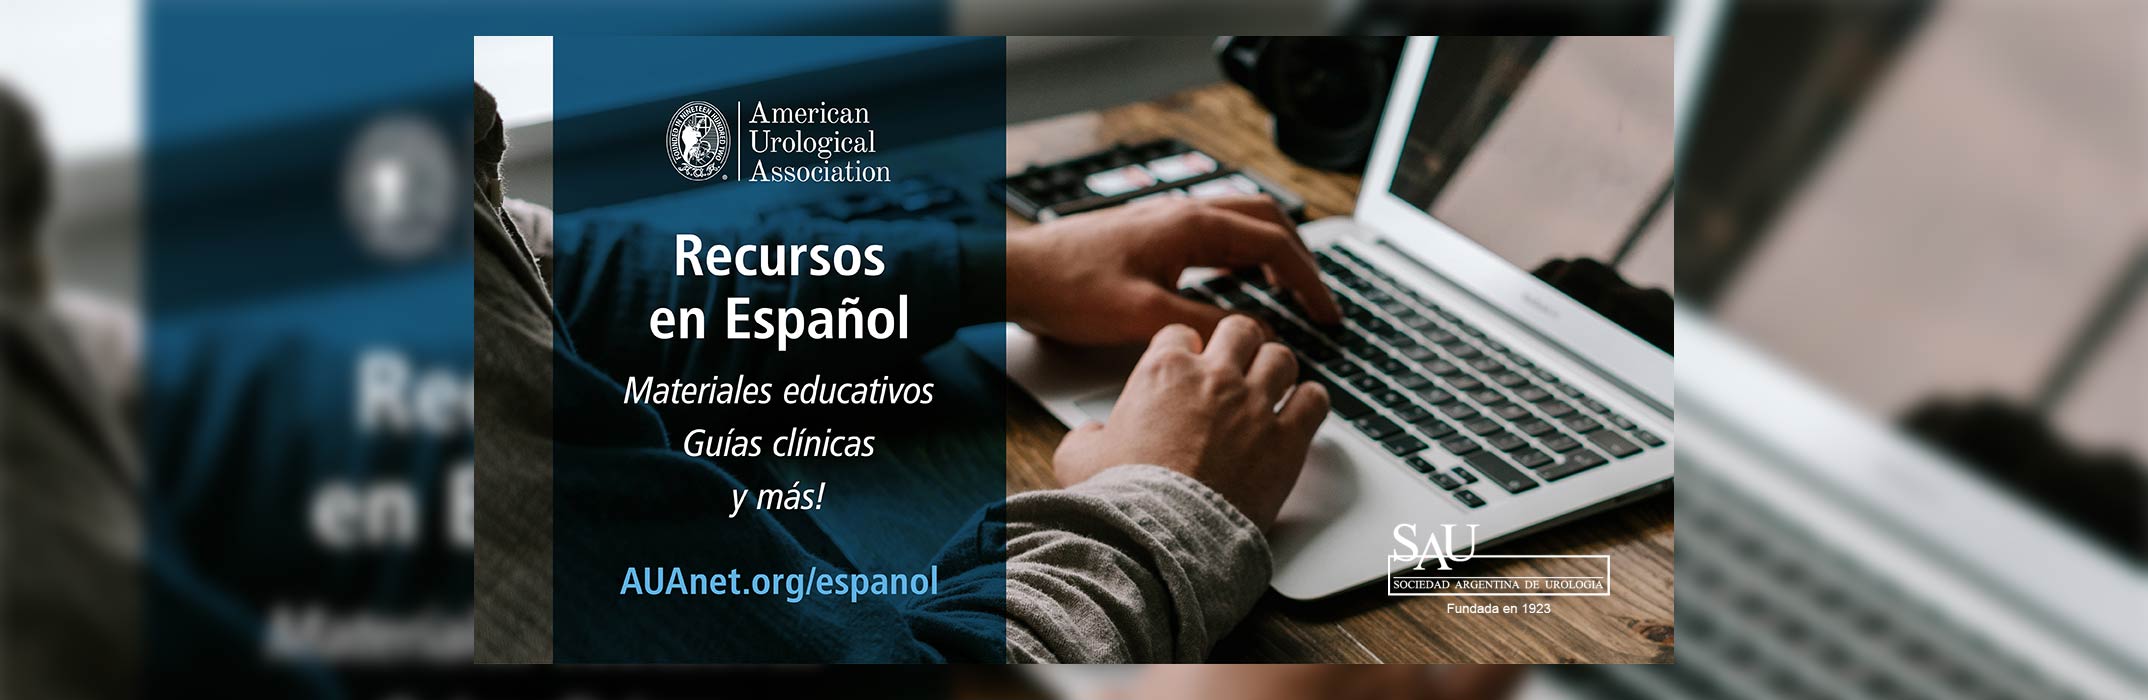 Recursos en español de la American Urological Association (AUA)